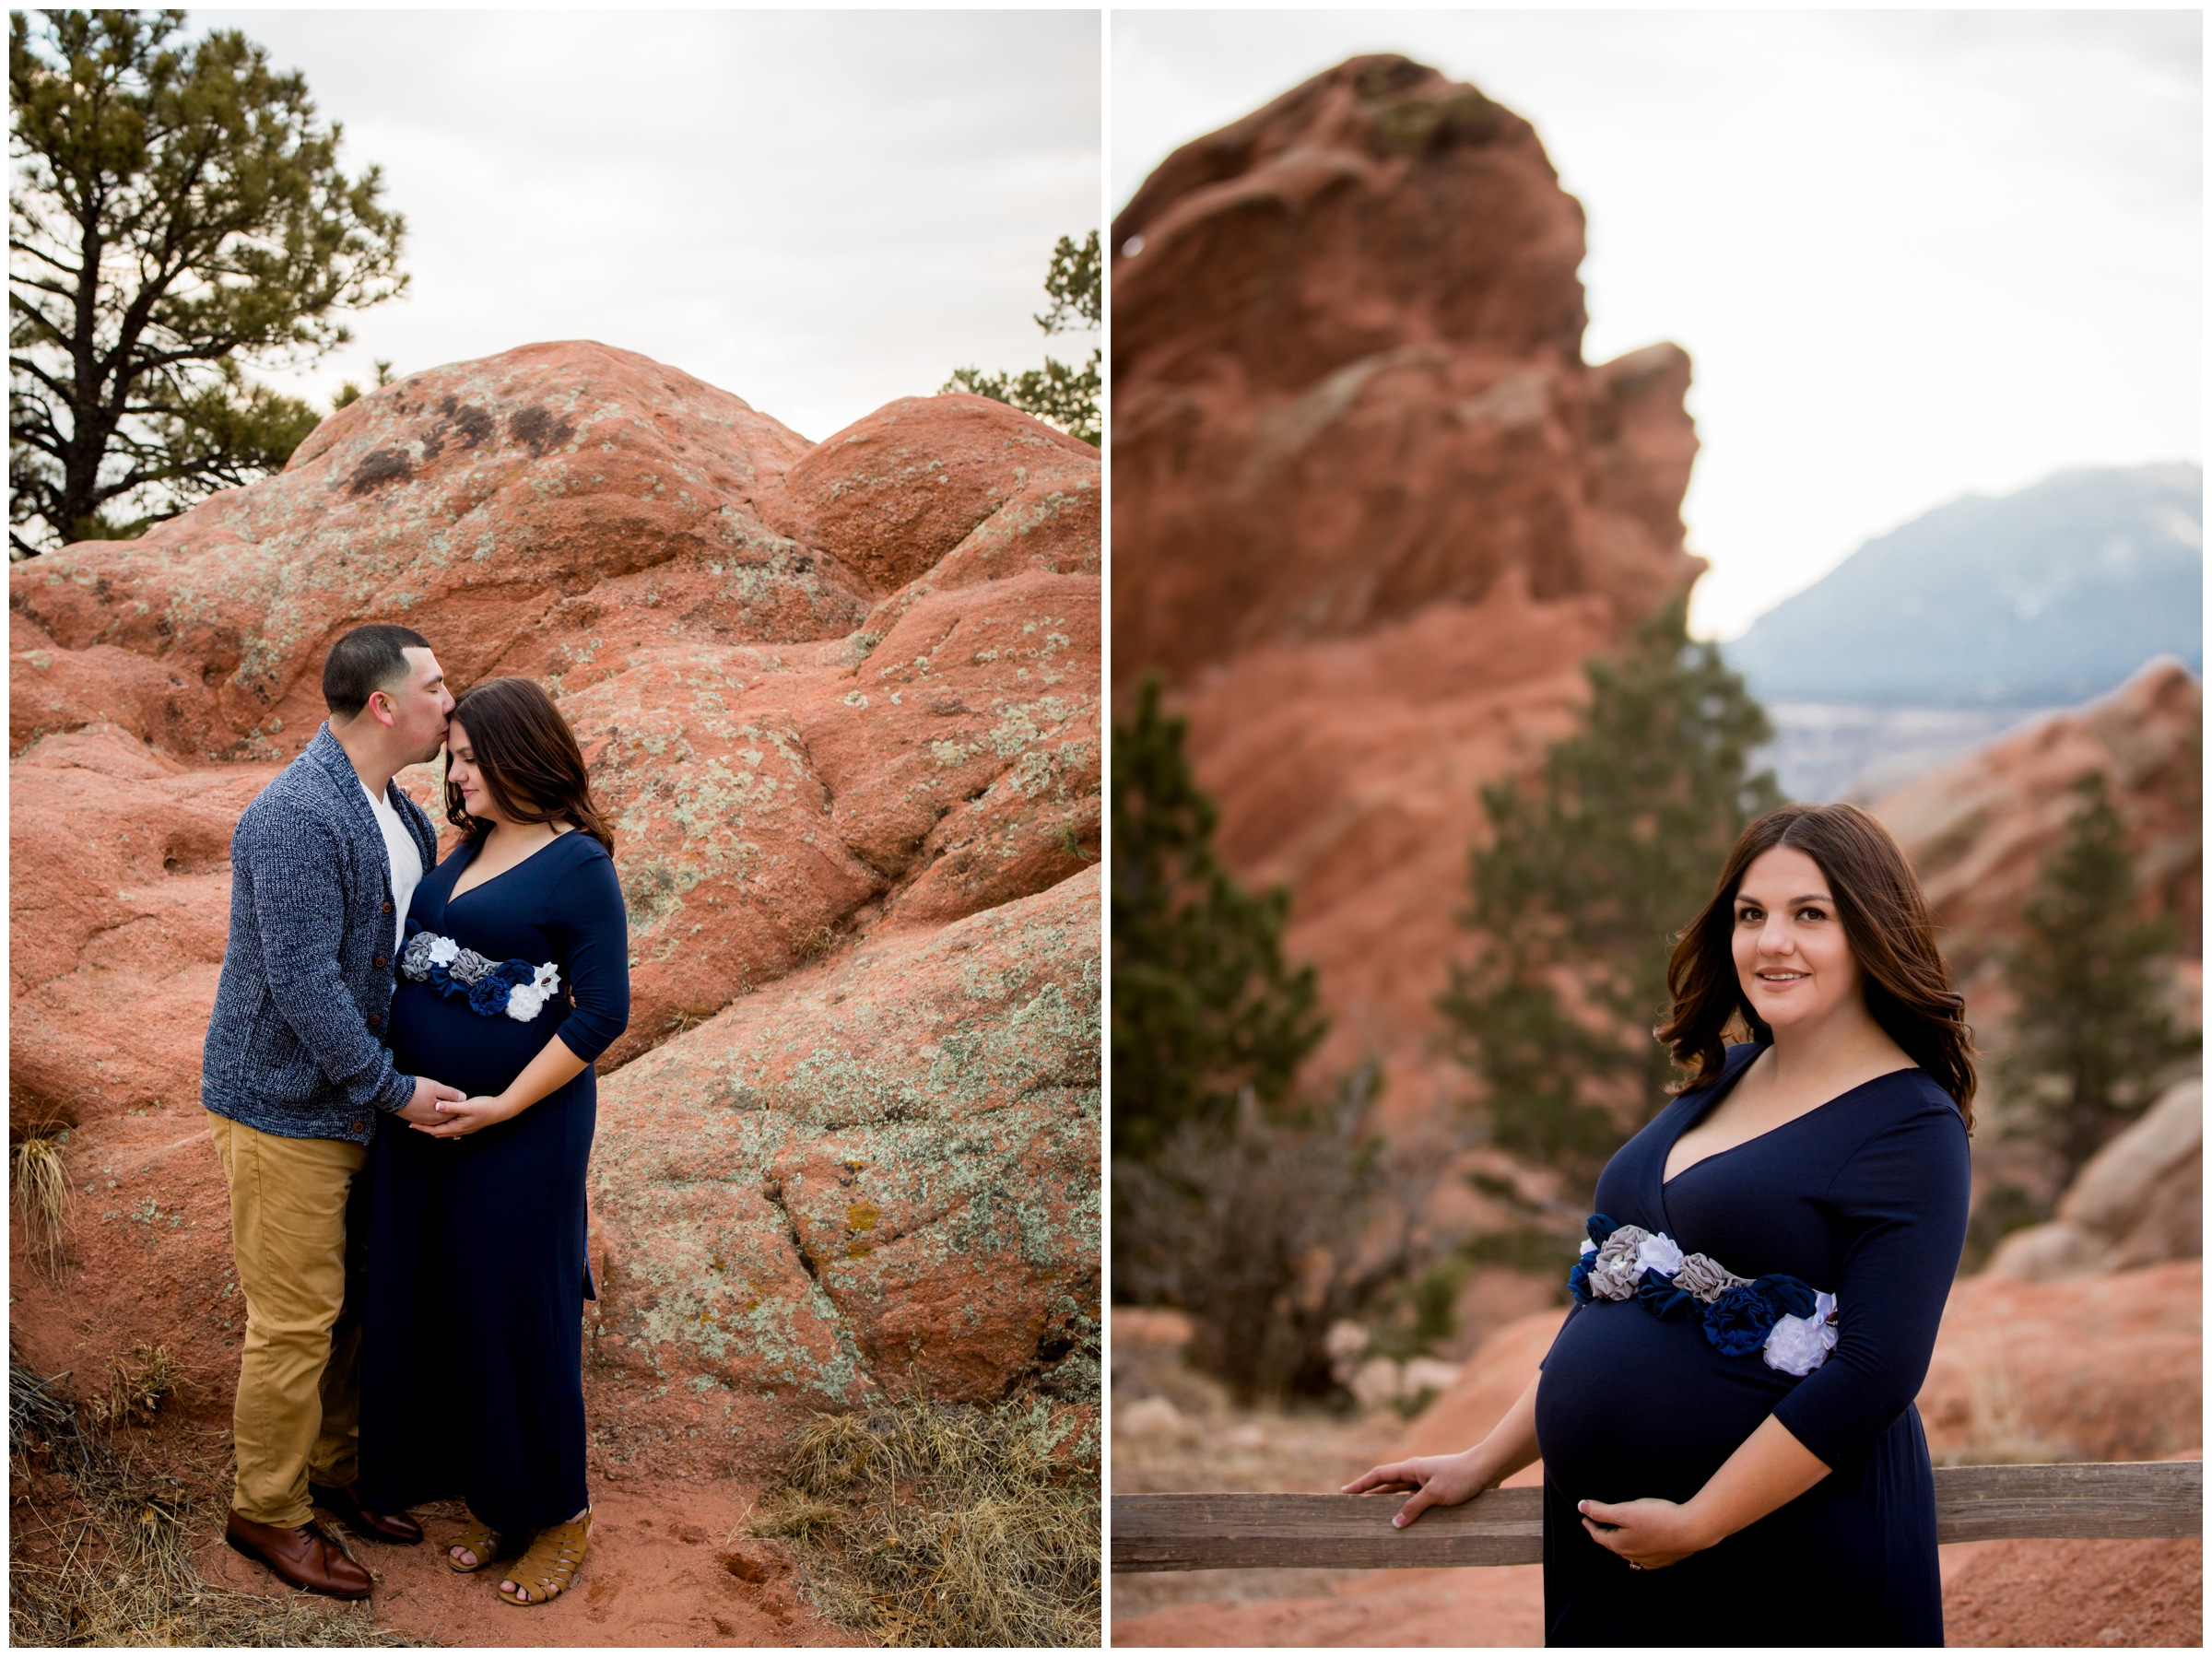 Red rocks Colorado maternity photography inspiration 